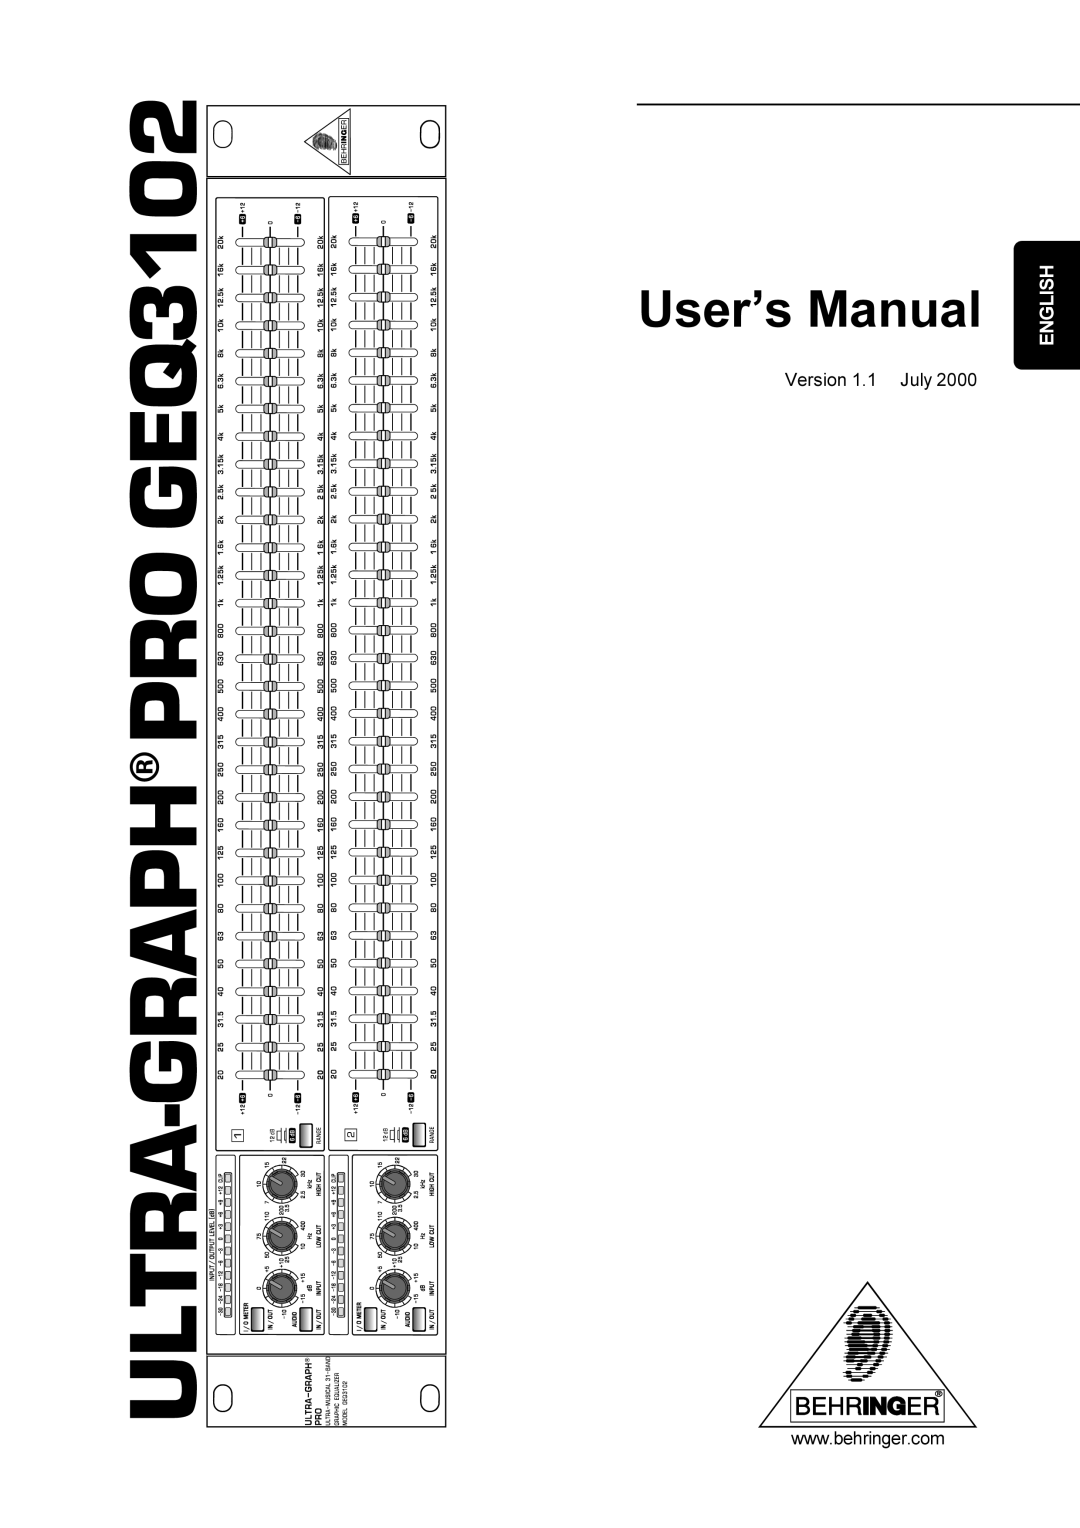 Behringer manual English, ULTRA-GRAPH PRO GEQ3102 